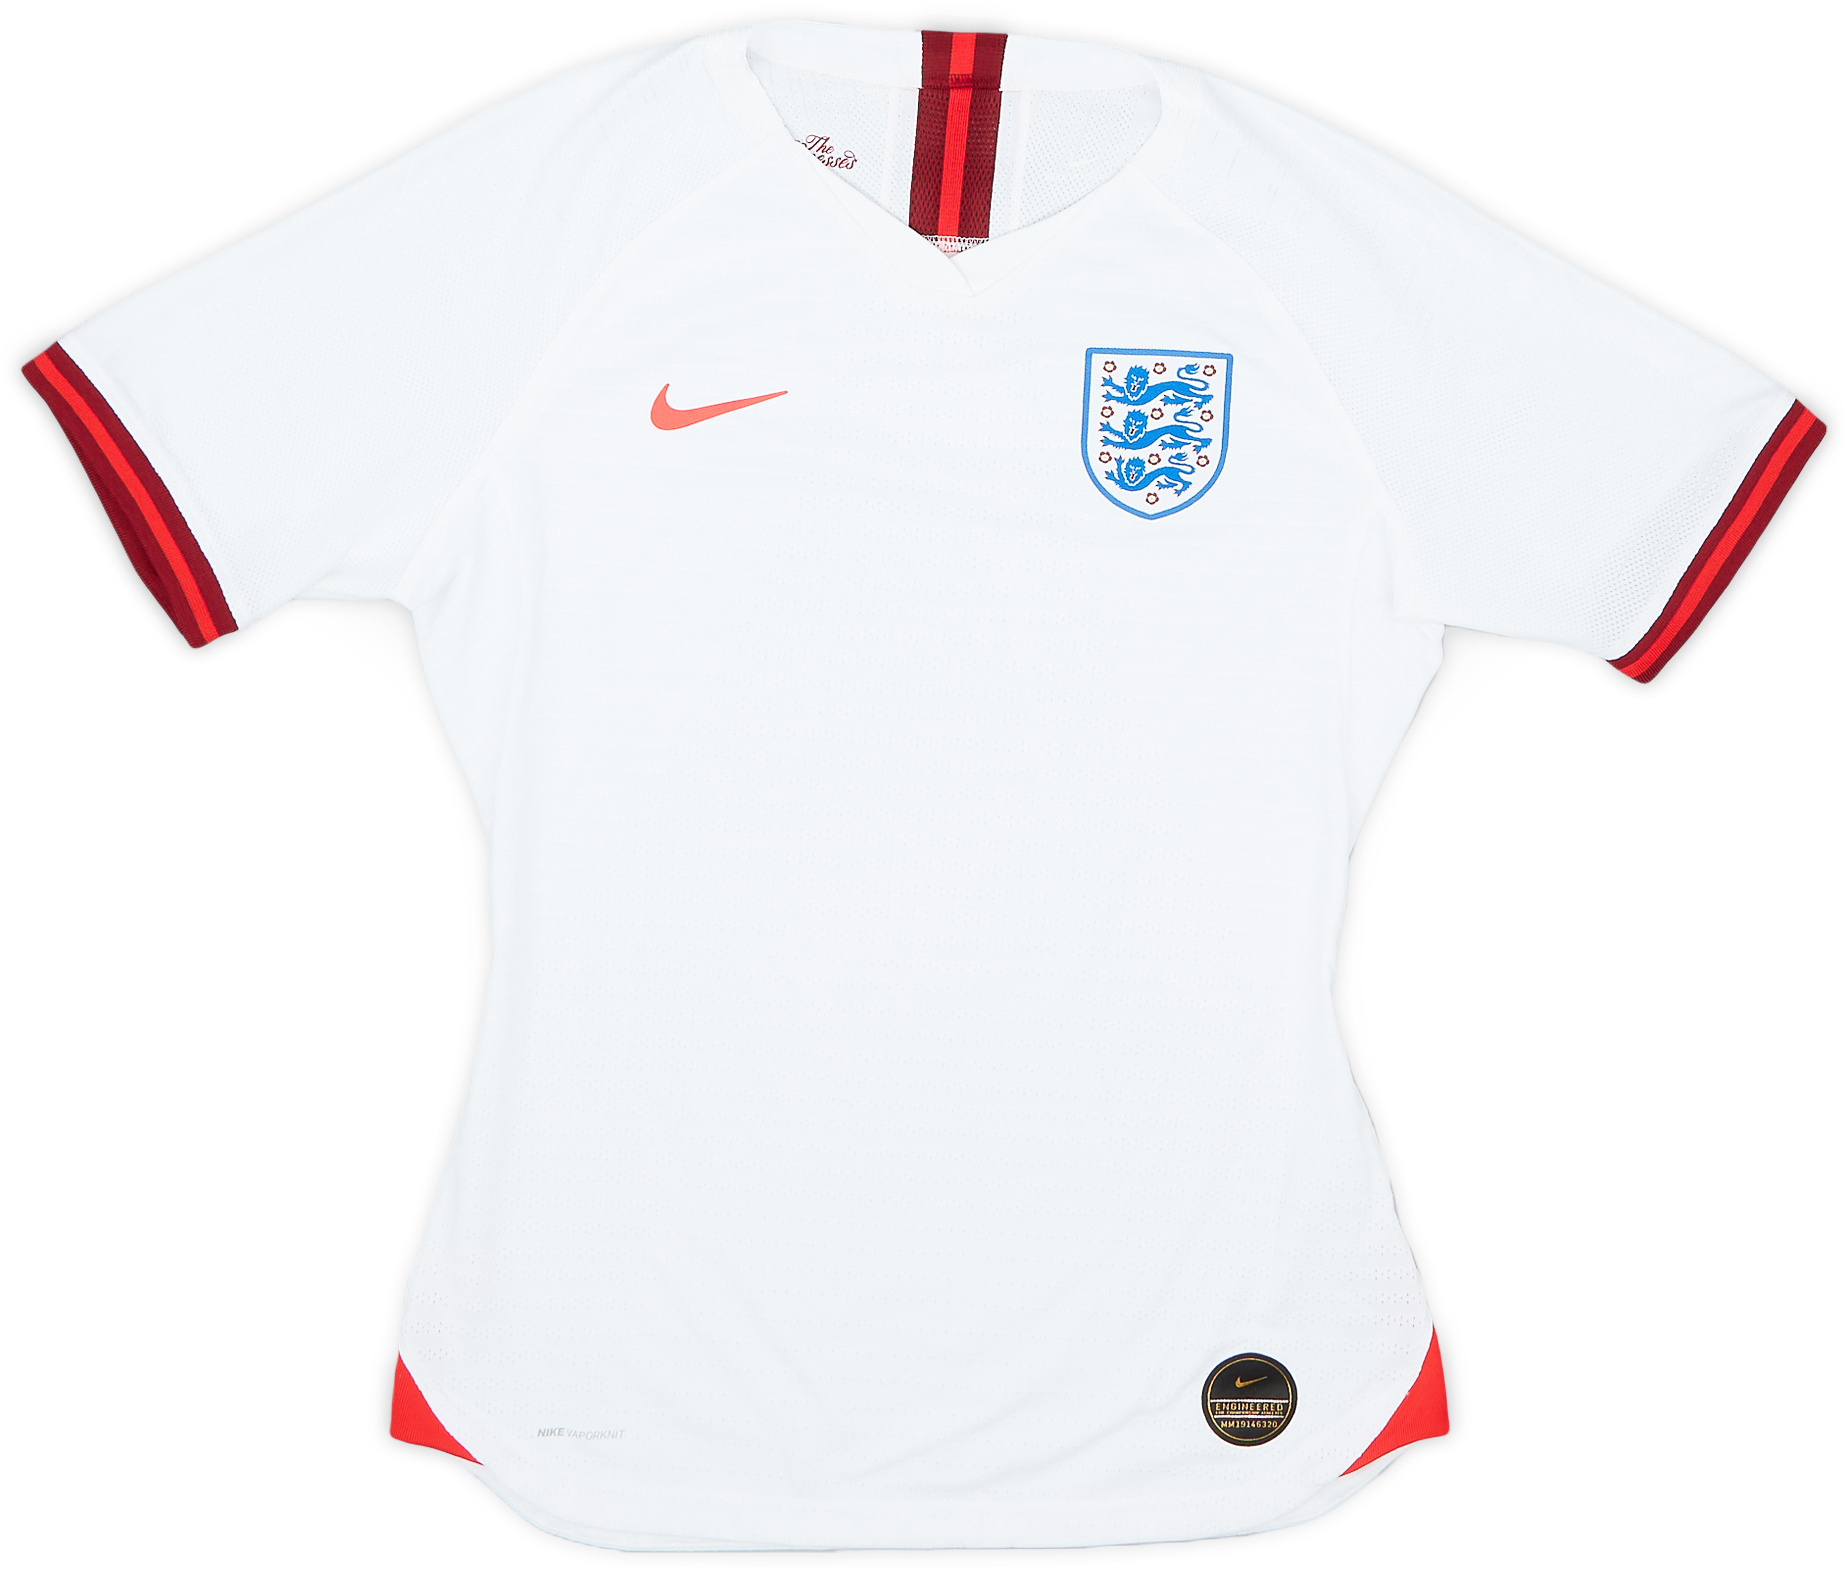 2019 England Lionesses Authentic Home Shirt - 10/10 - (Women's )